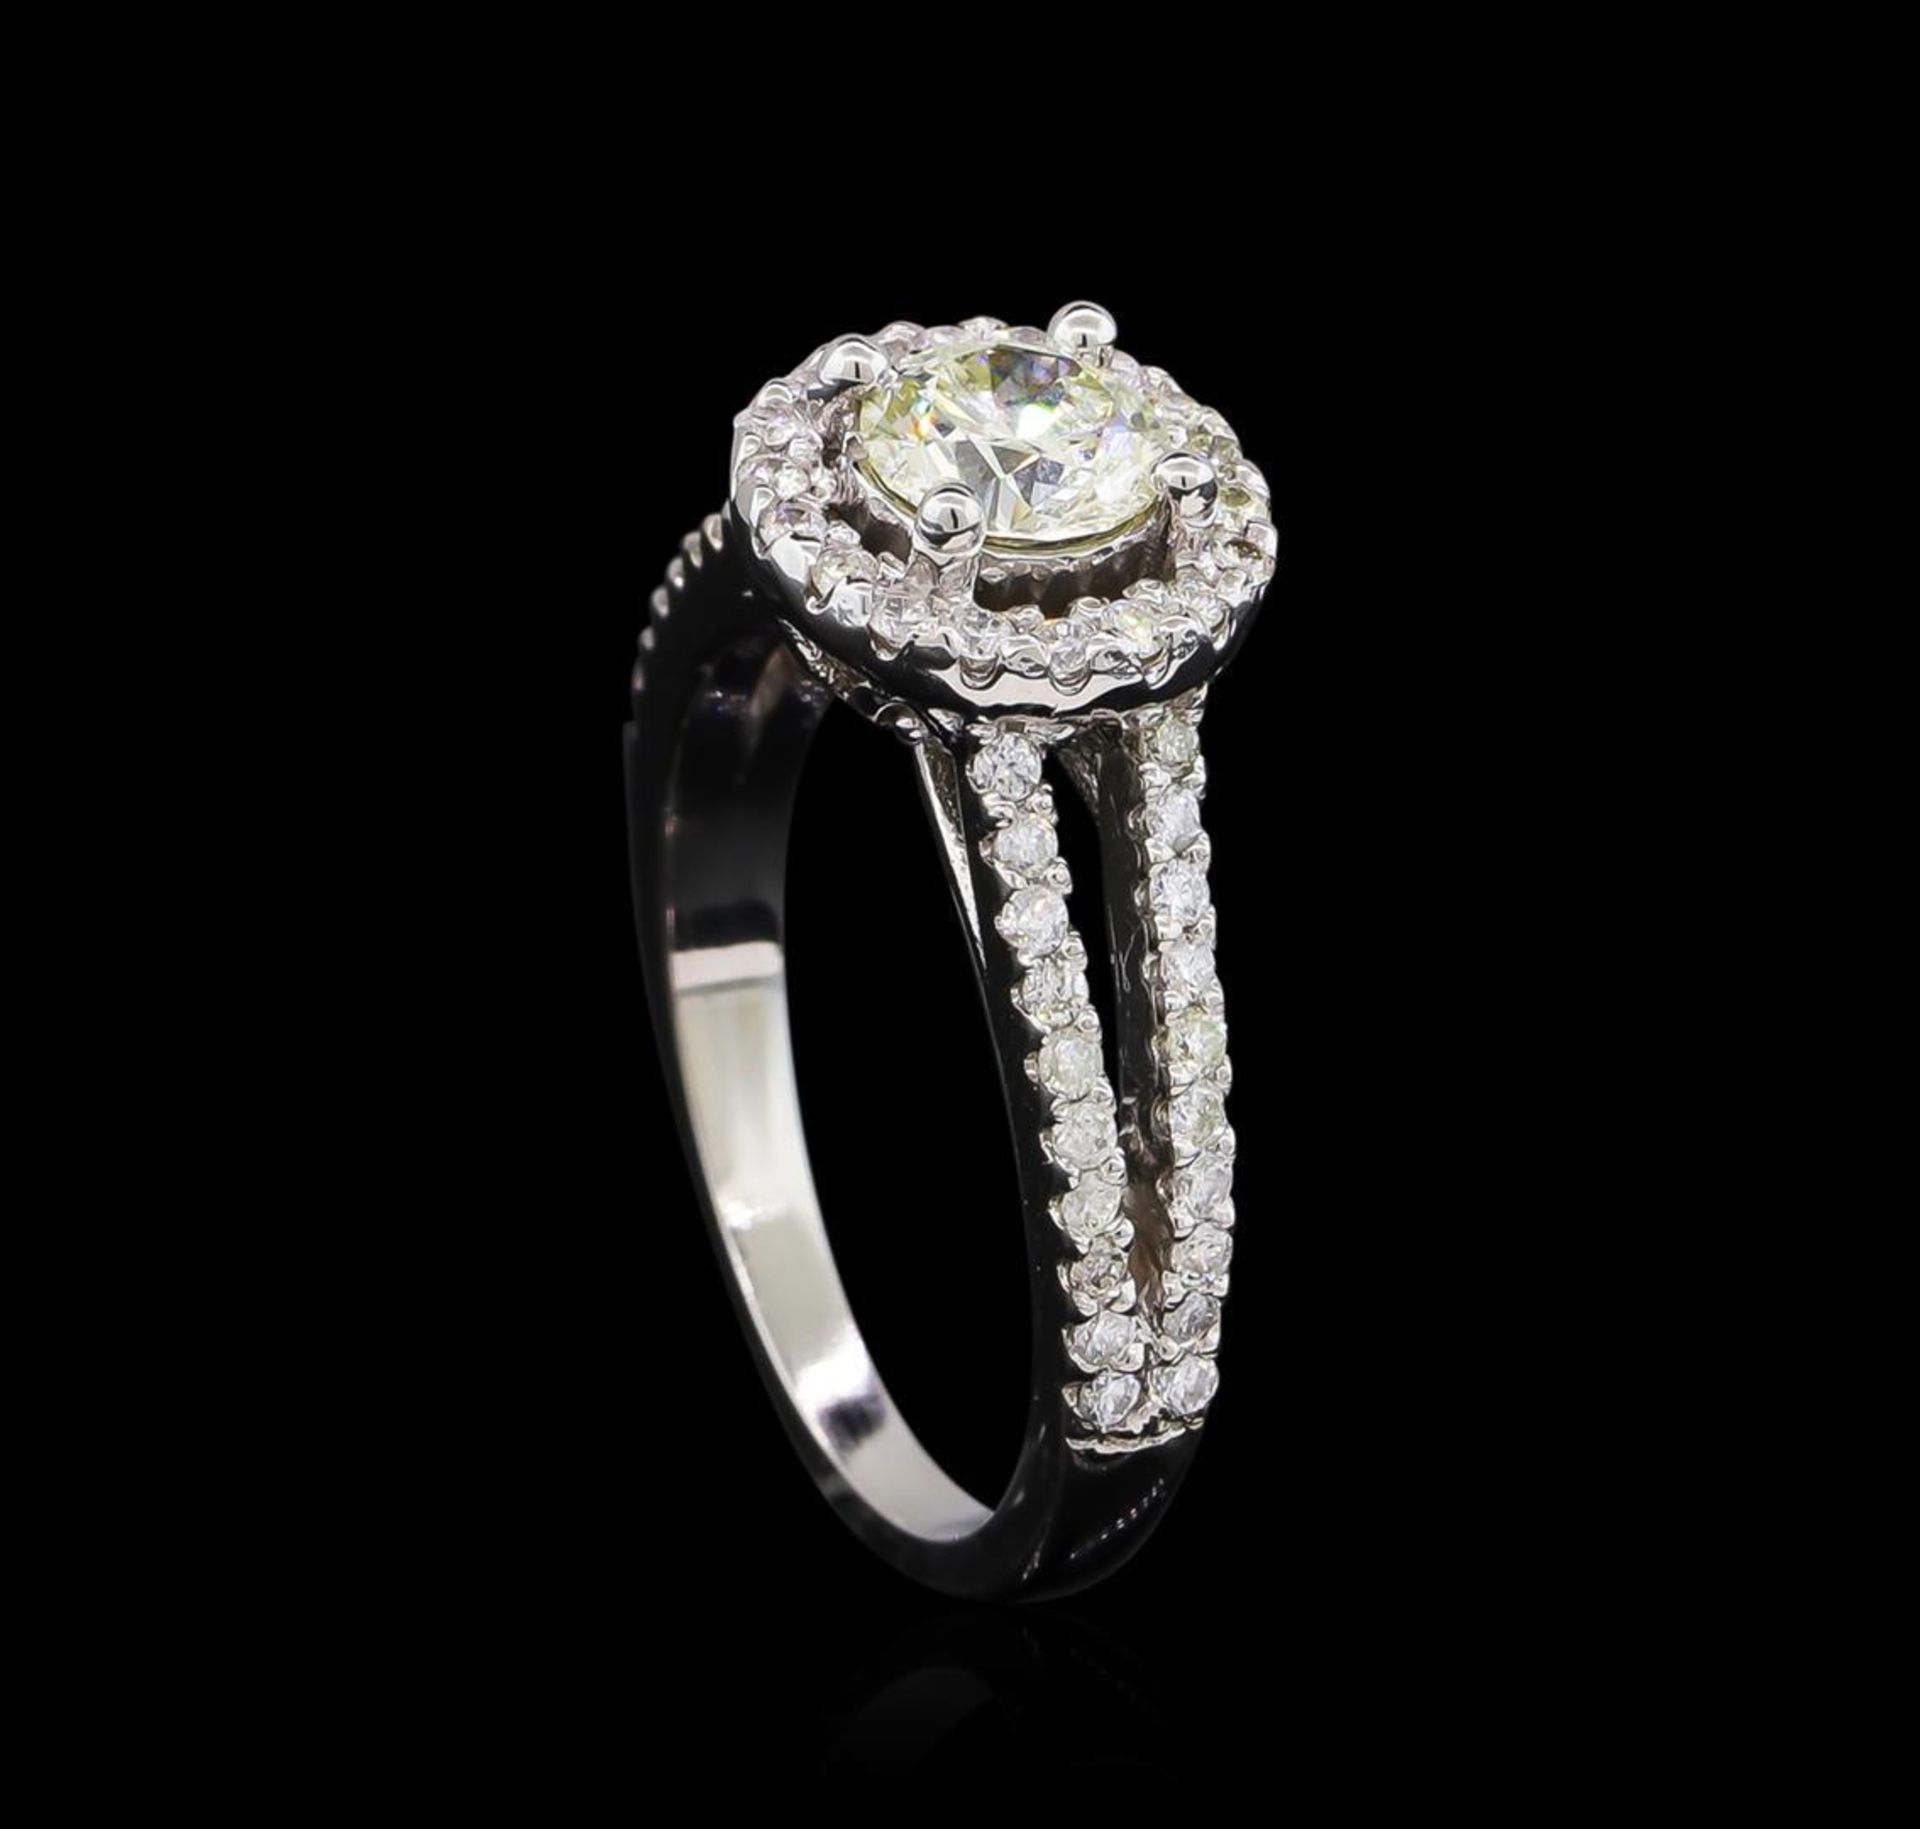 1.18 ctw Diamond Ring - 14KT White Gold - Image 4 of 5